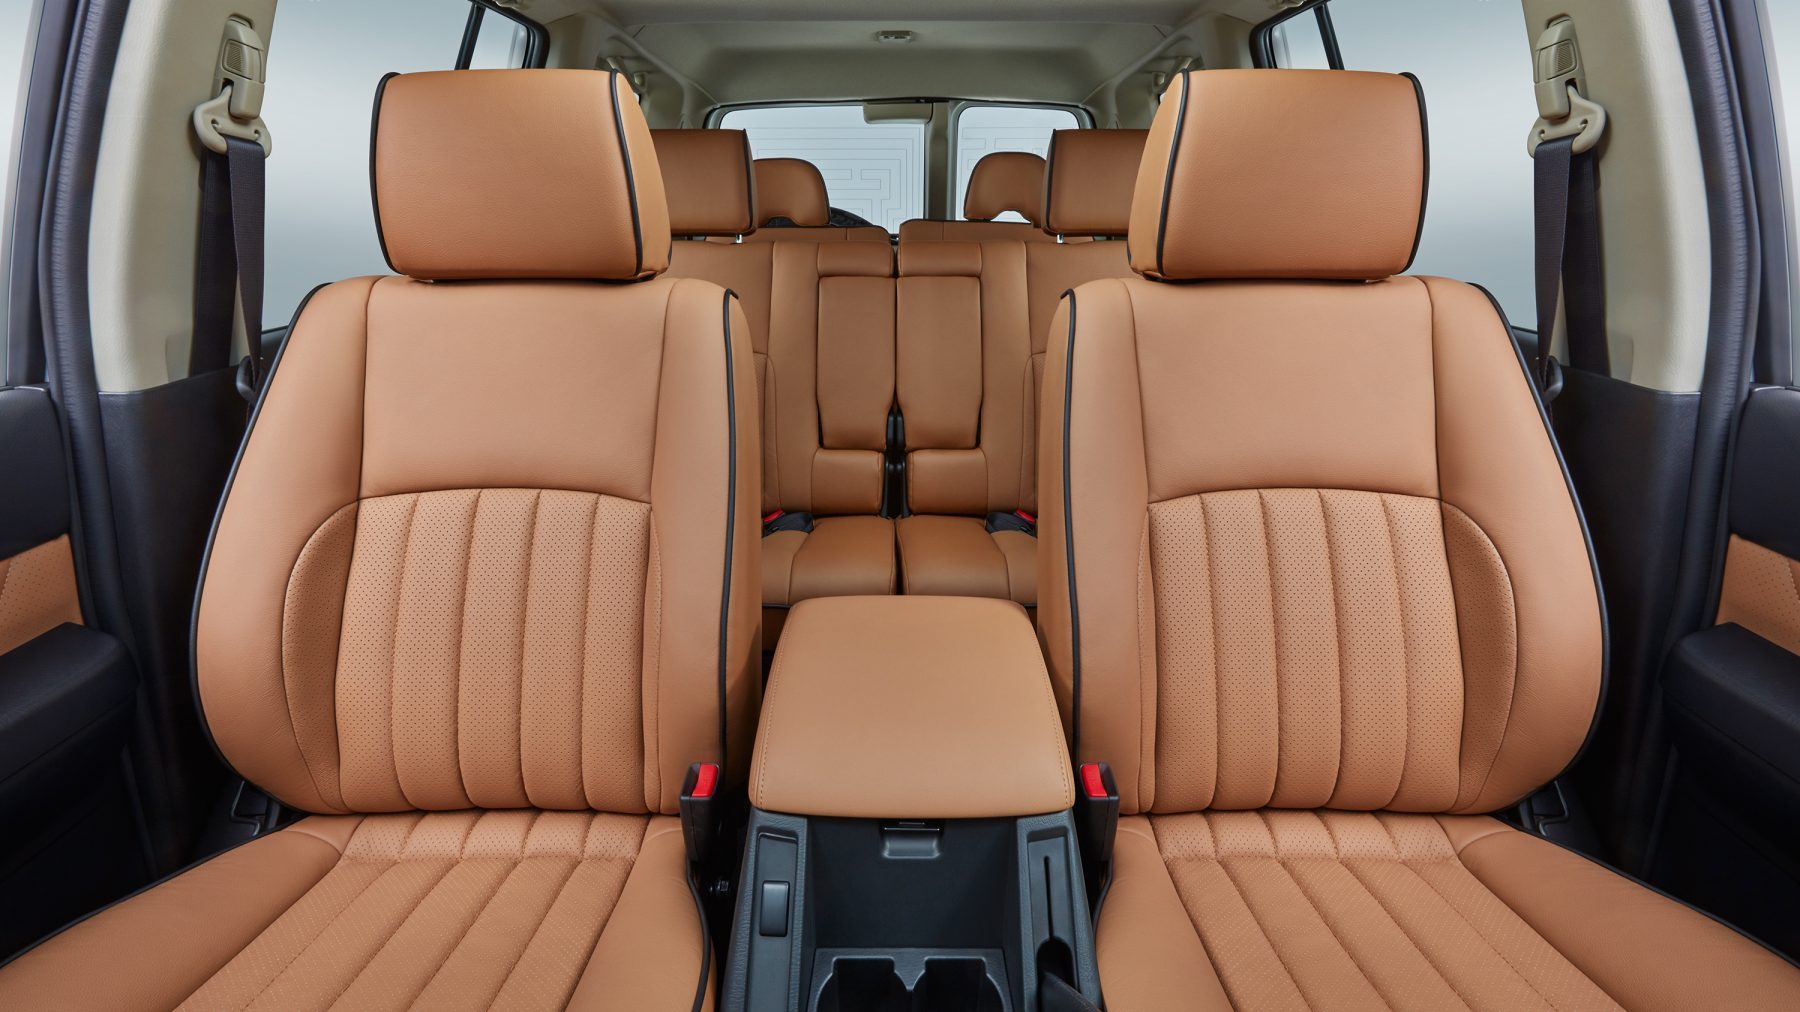 orange patrol safari seats interior